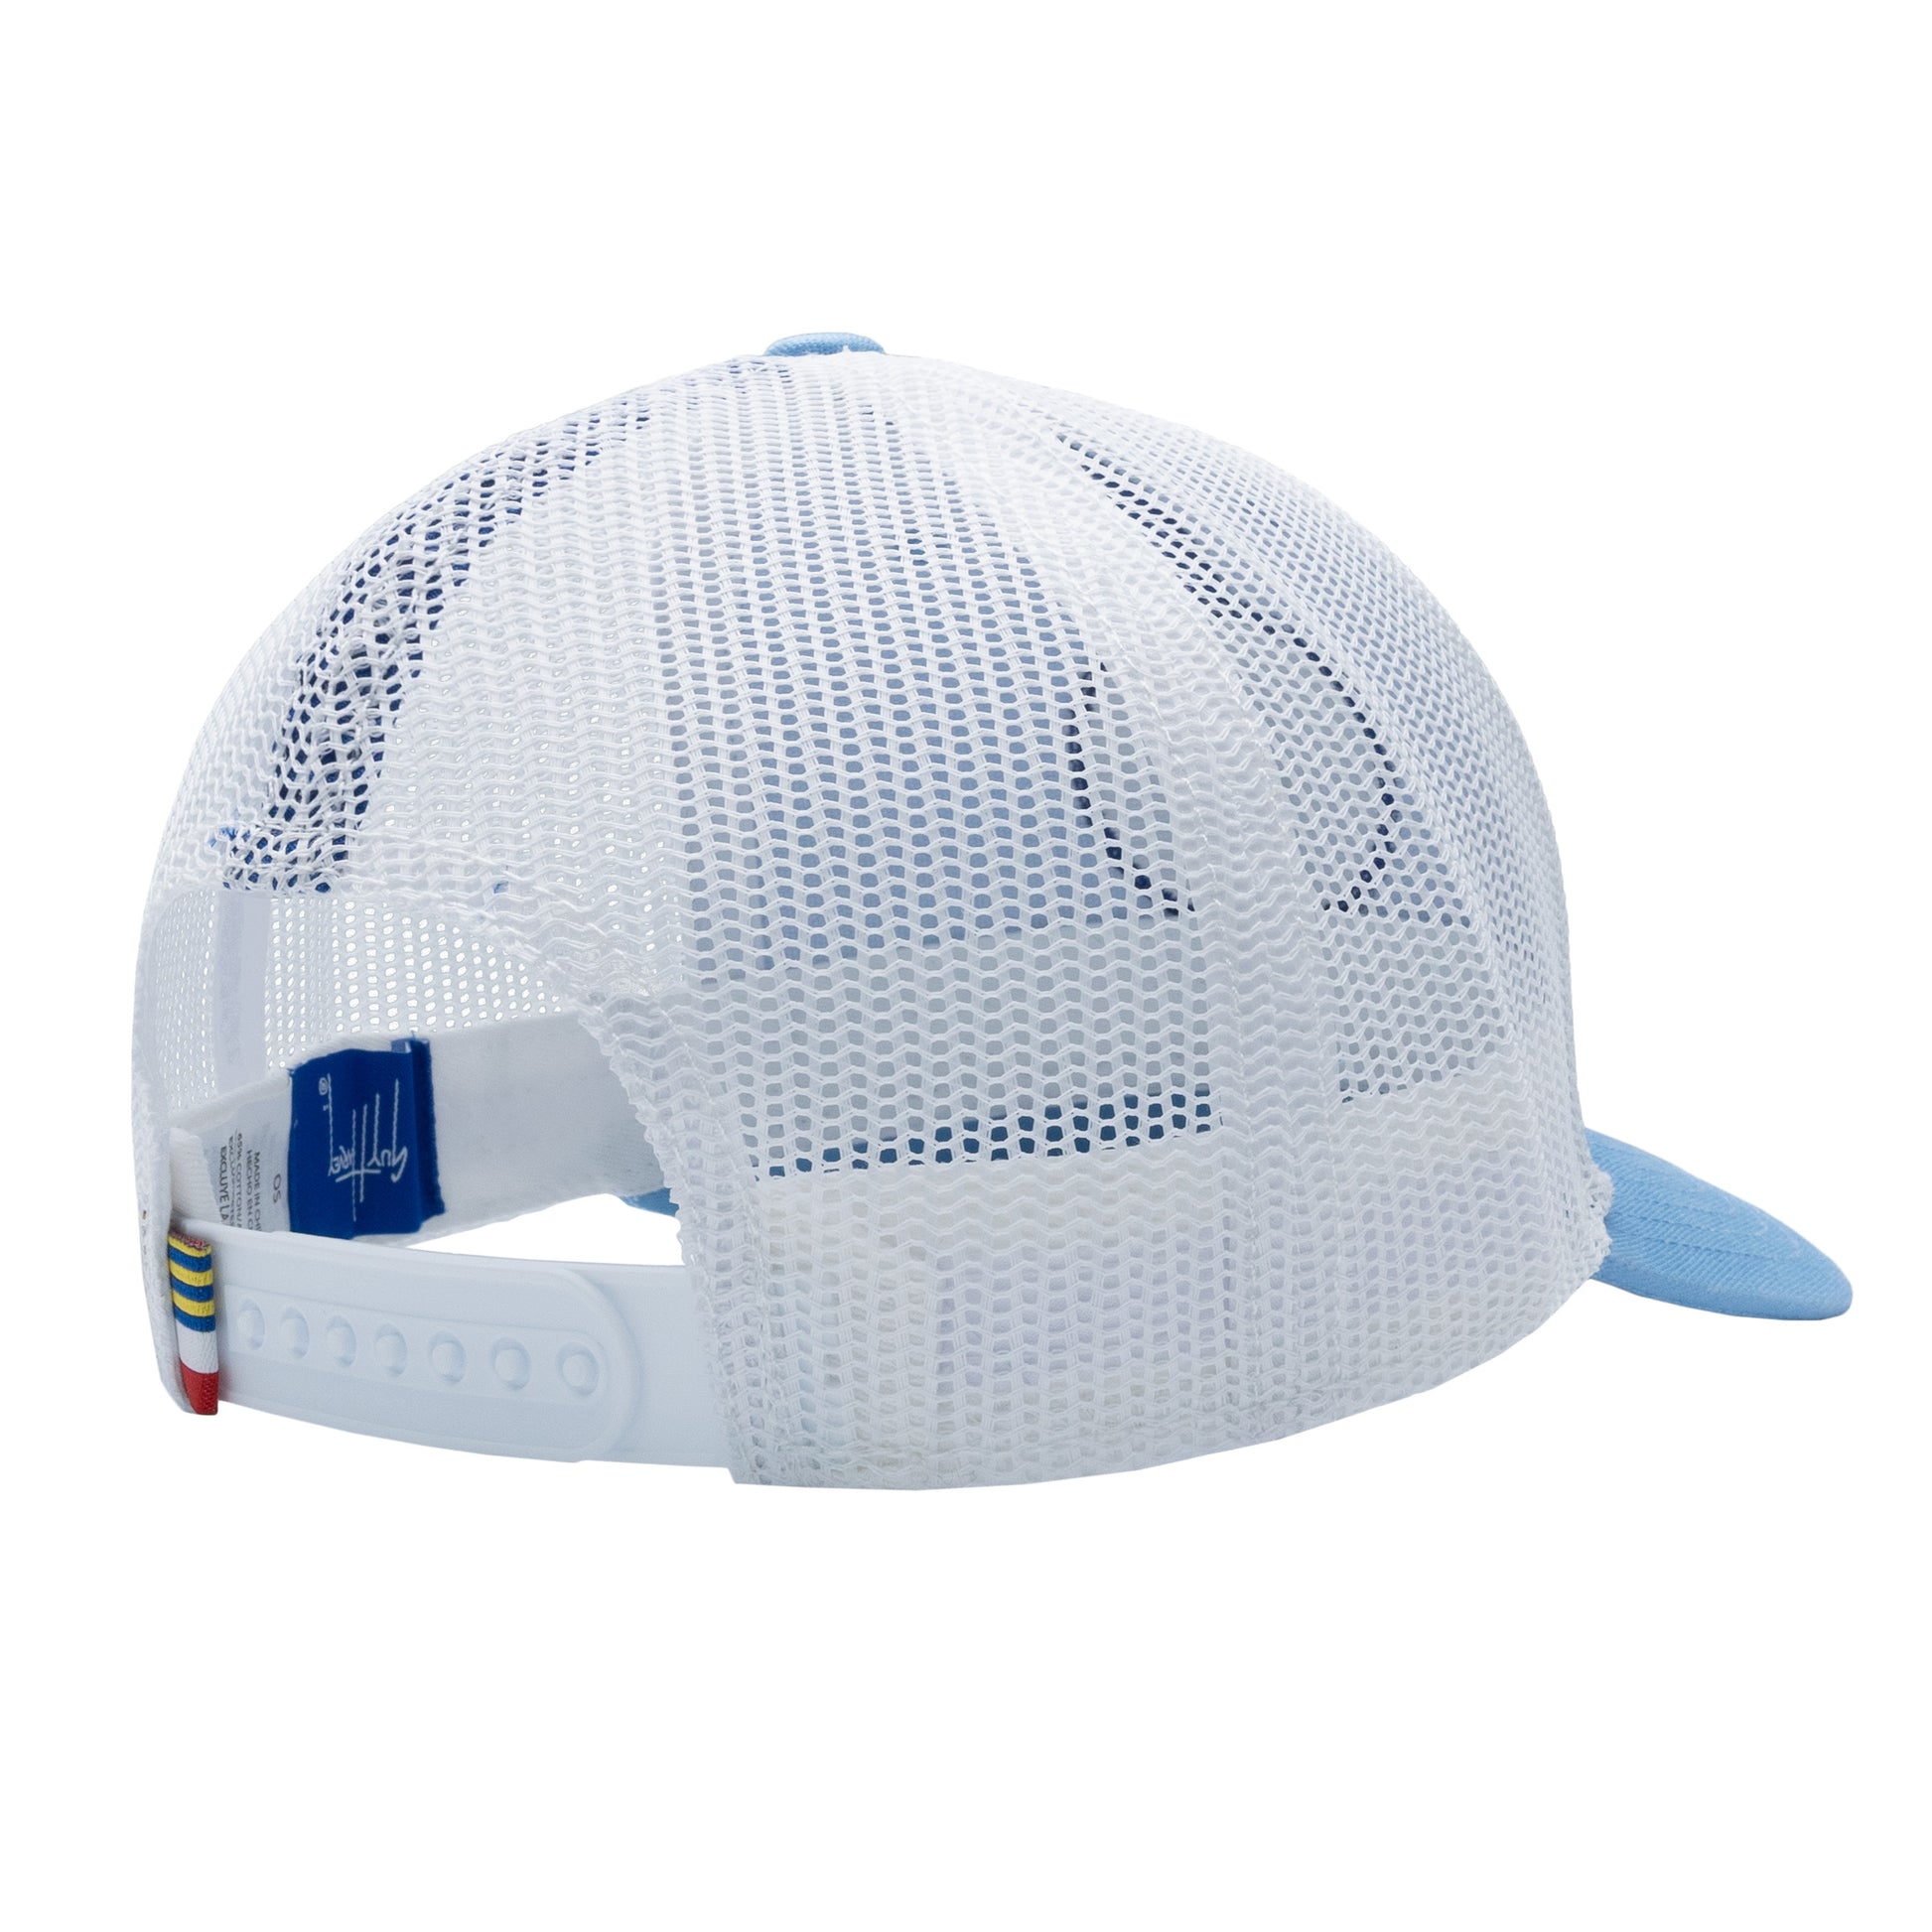 Men's mesh baseball cap